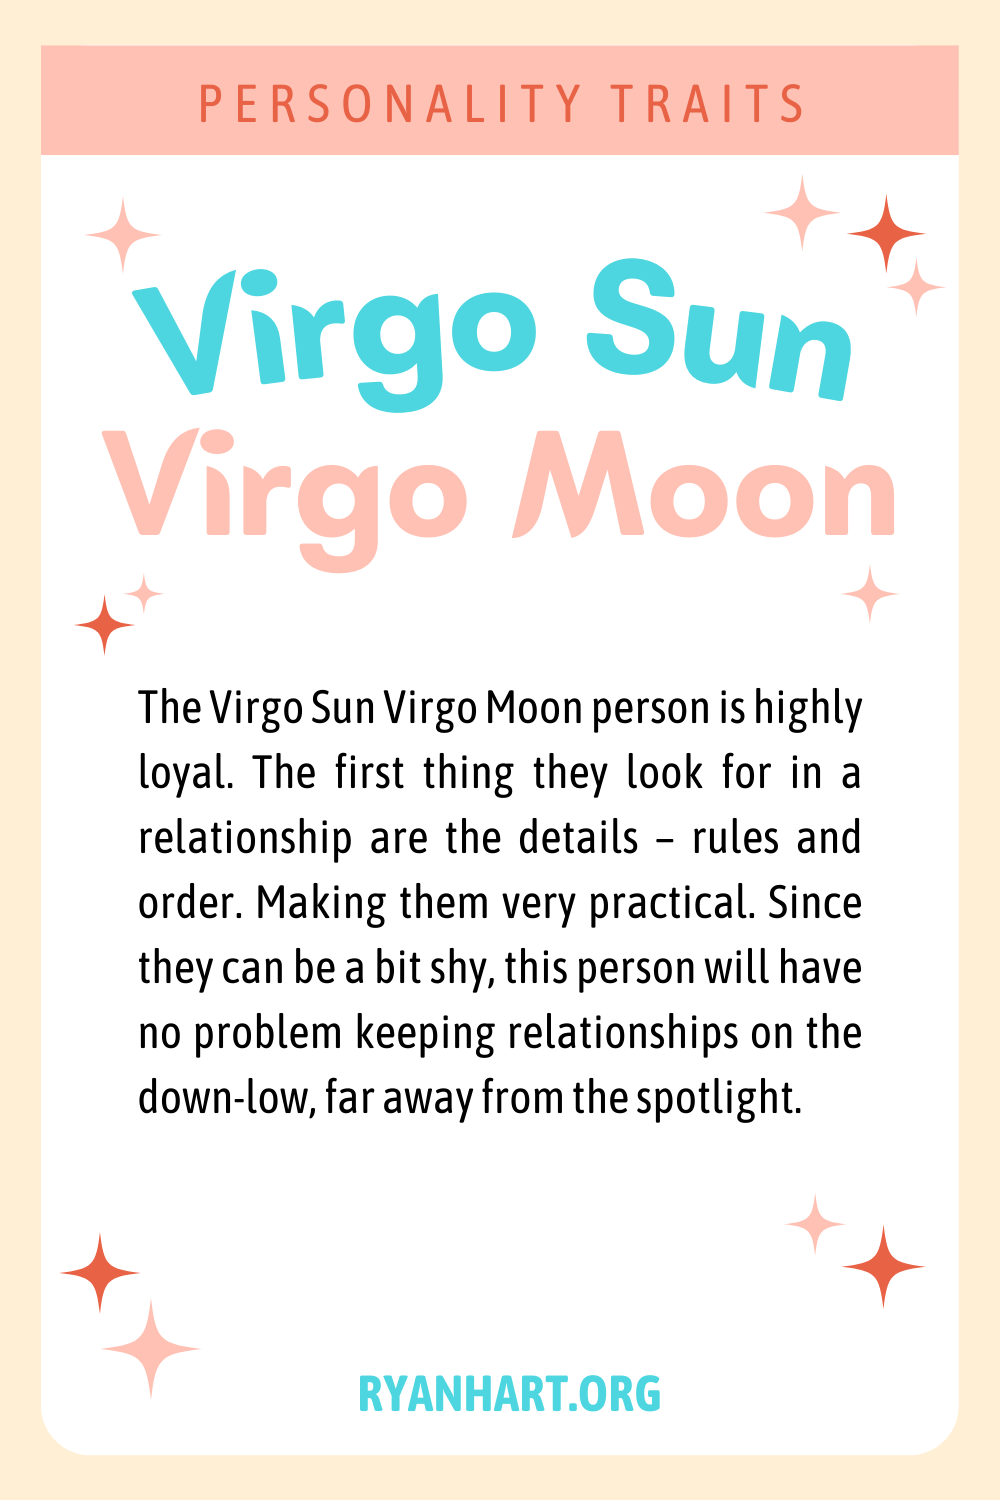 Virgo Sun Virgo Moon Description